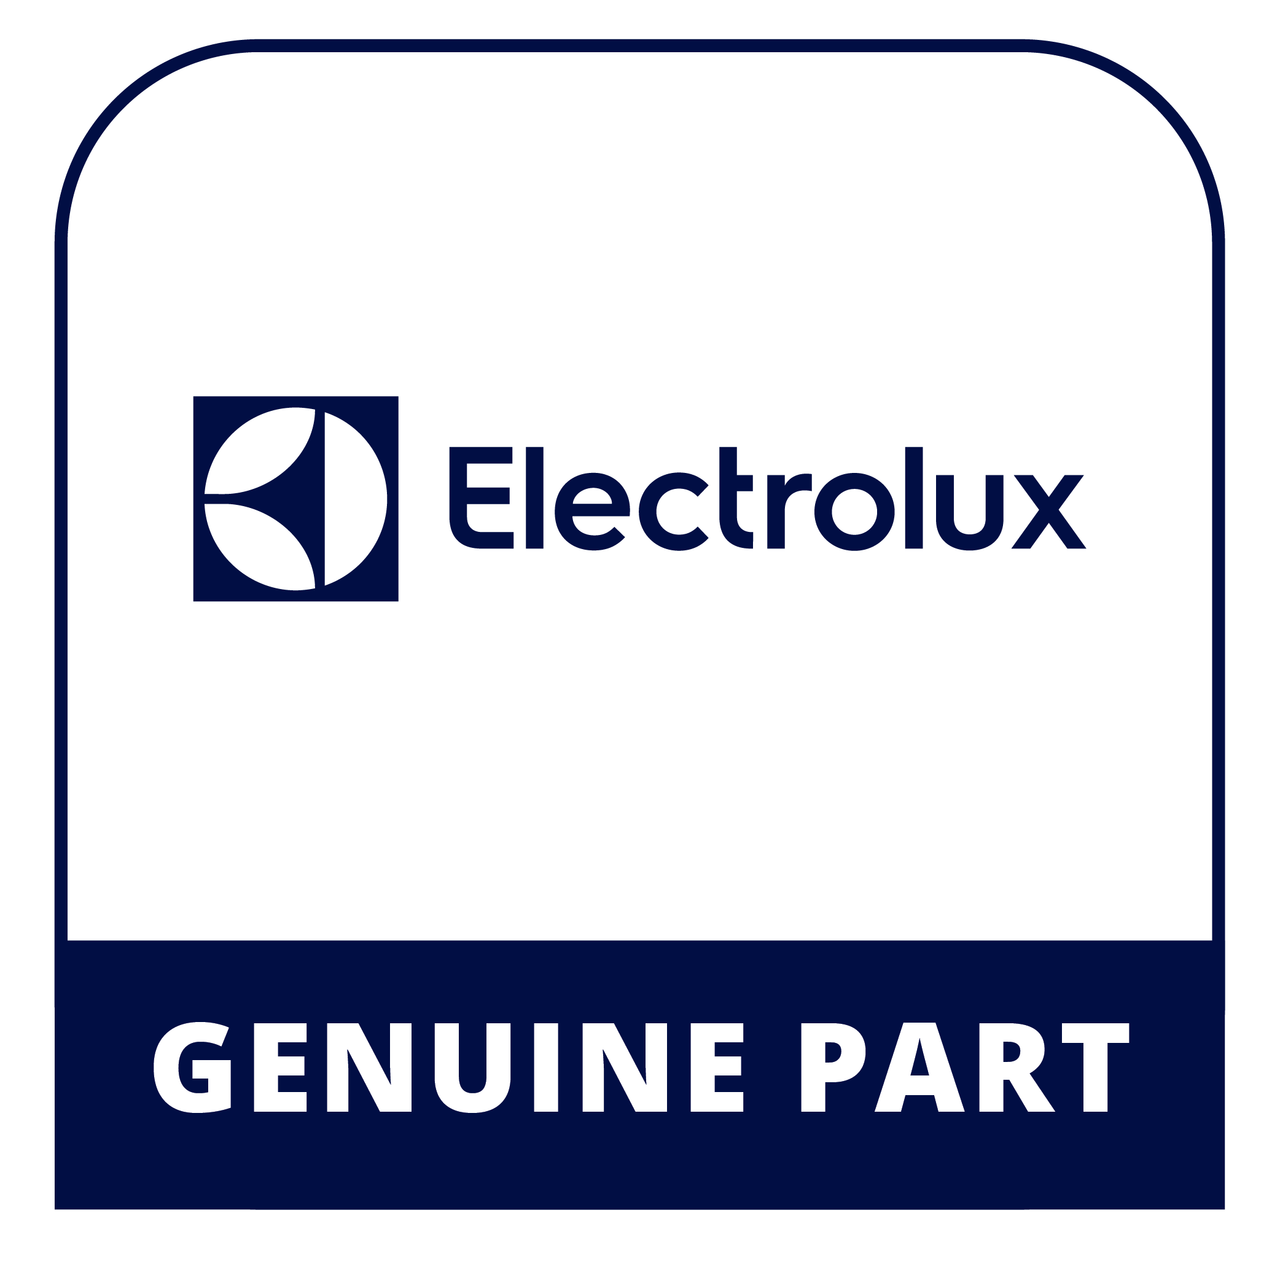 Frigidaire - Electrolux 316557129 Clock - Genuine Electrolux Part